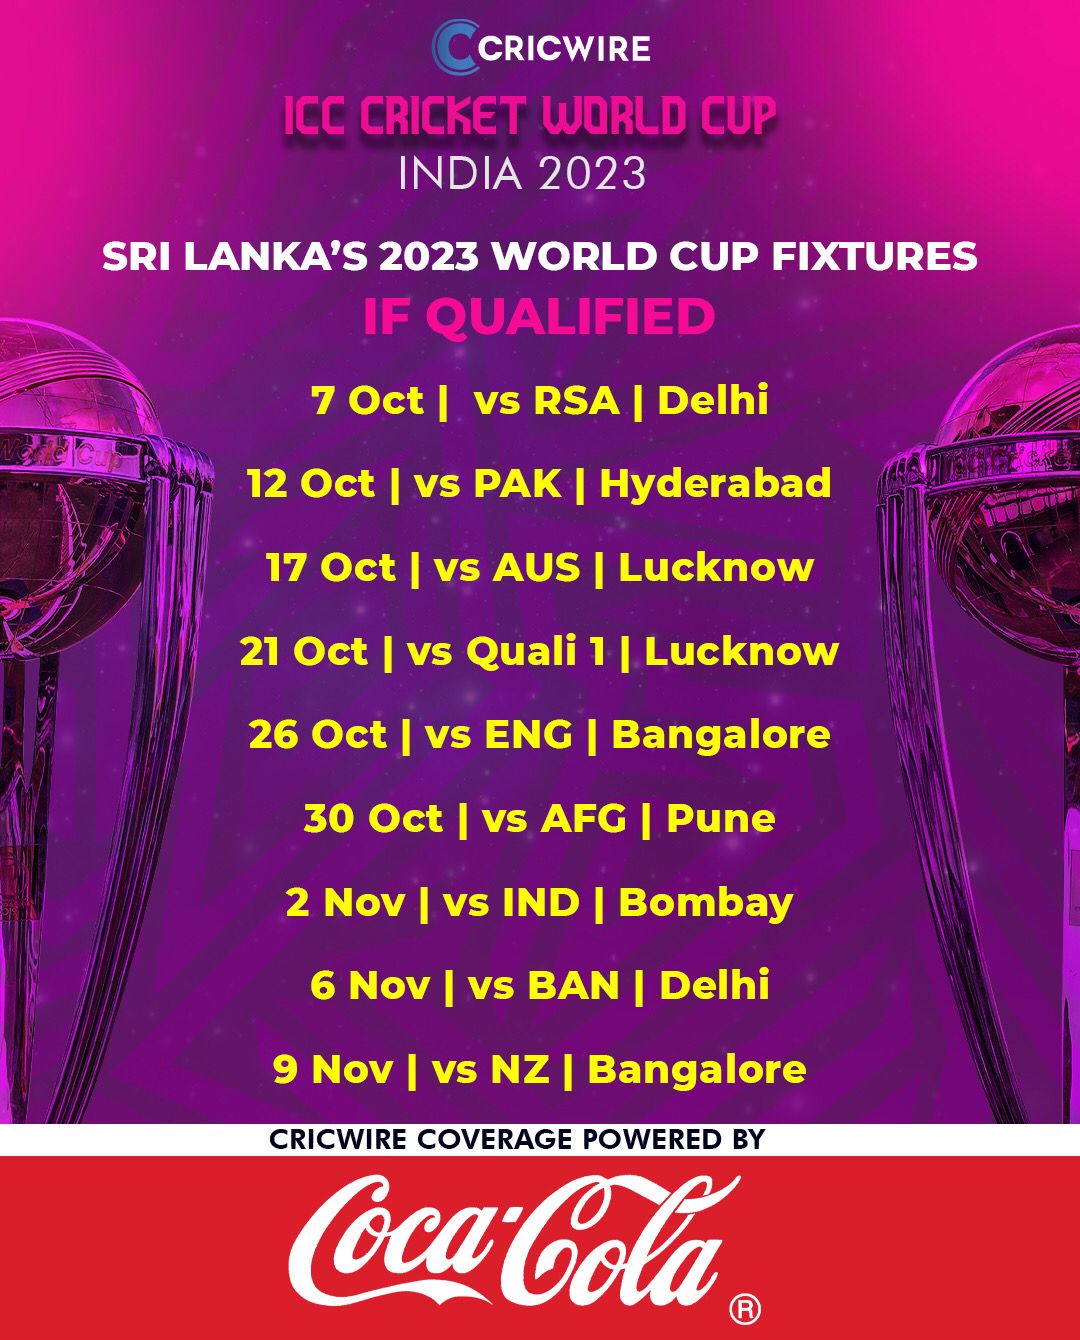 Sri Lanka's Cricket World Cup 2023 fixtures